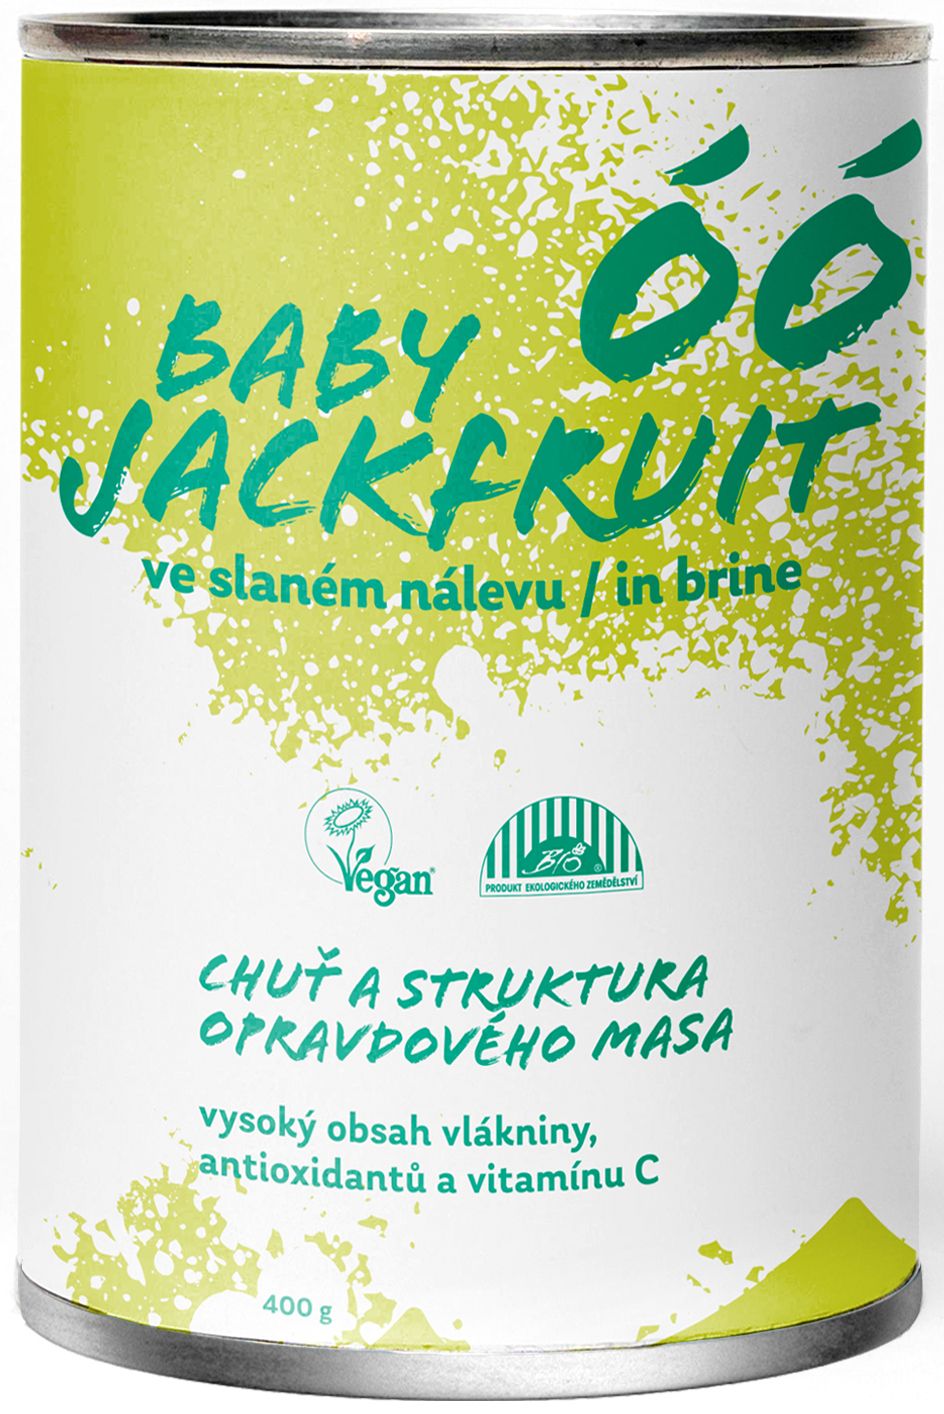 Sense Coco Baby jackfruit ve slaném nálevu BIO